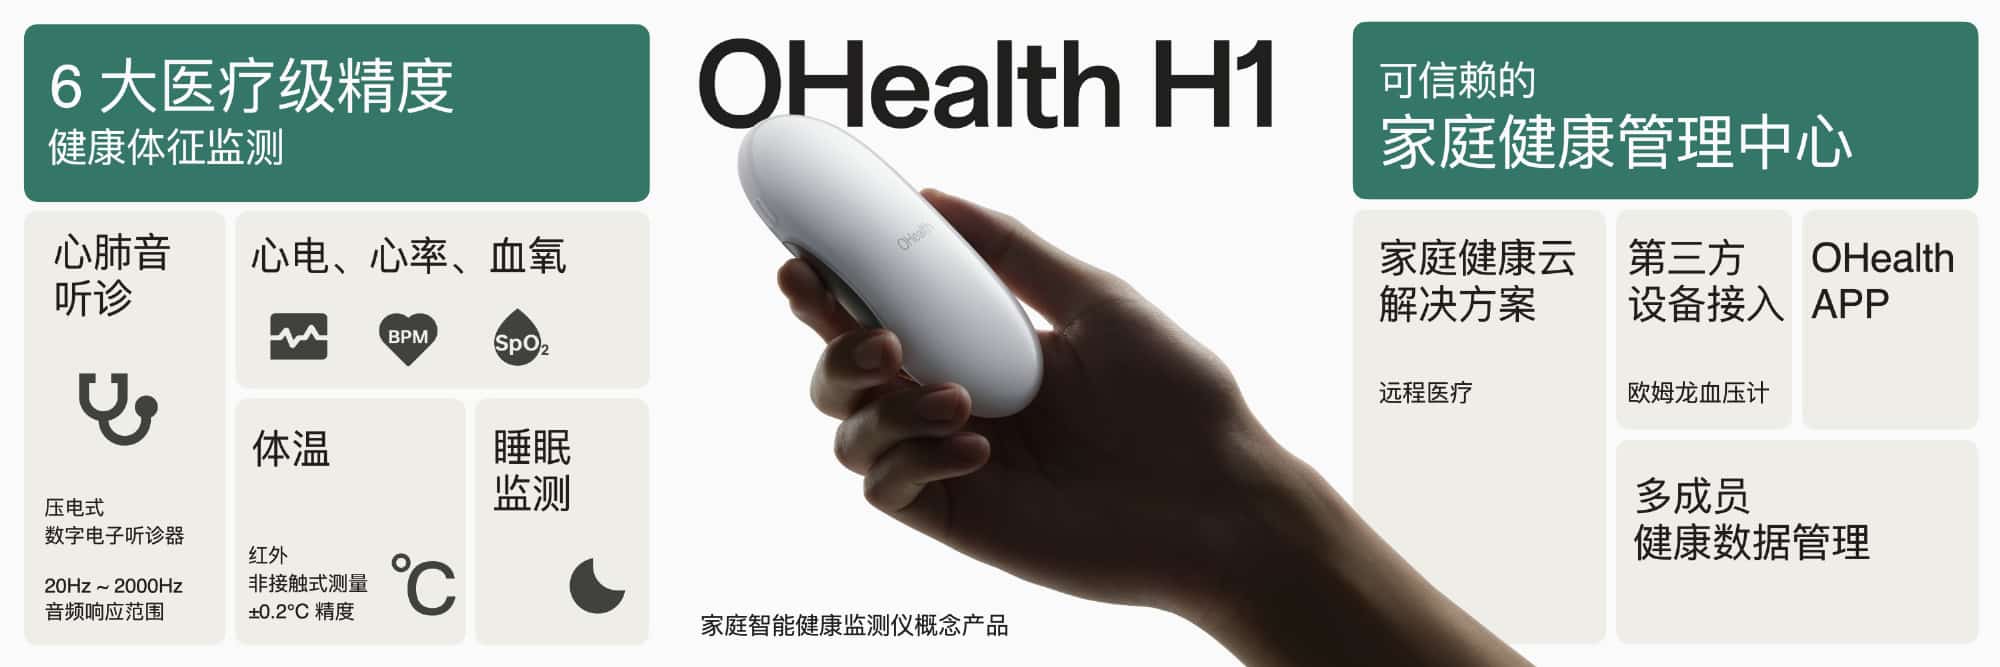 OHhealth H1